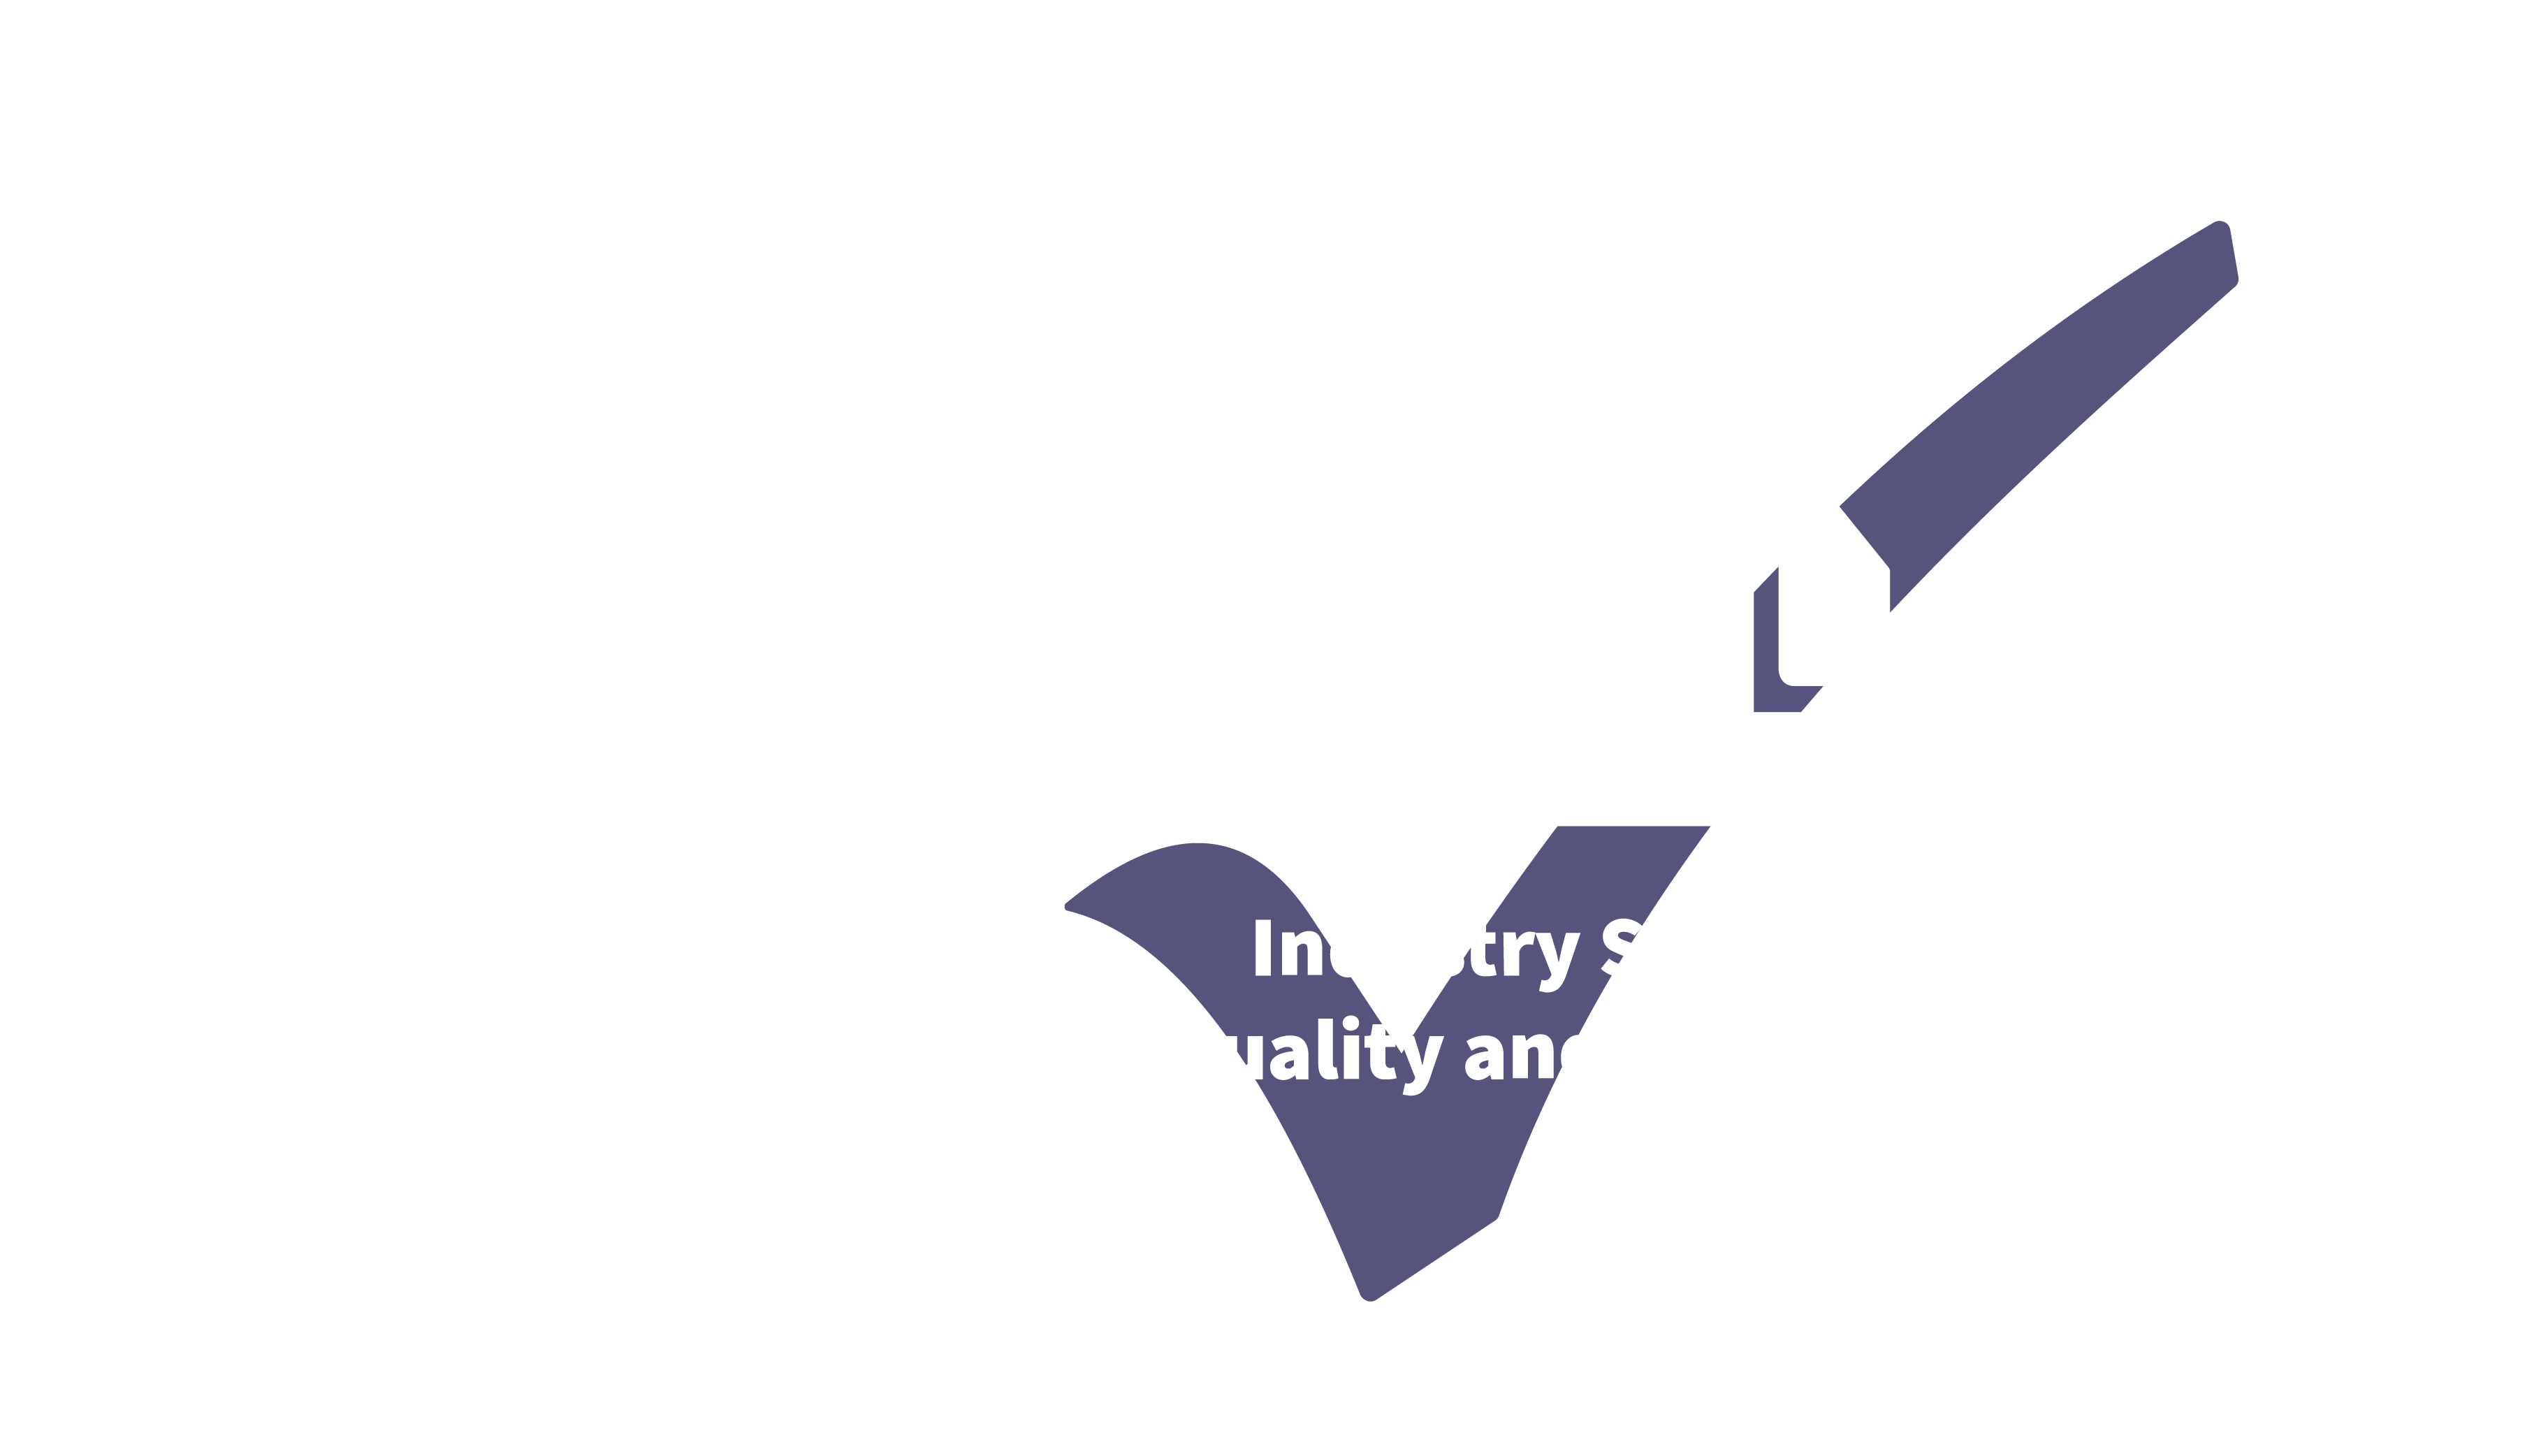 industry_standards_logo-edit4-01